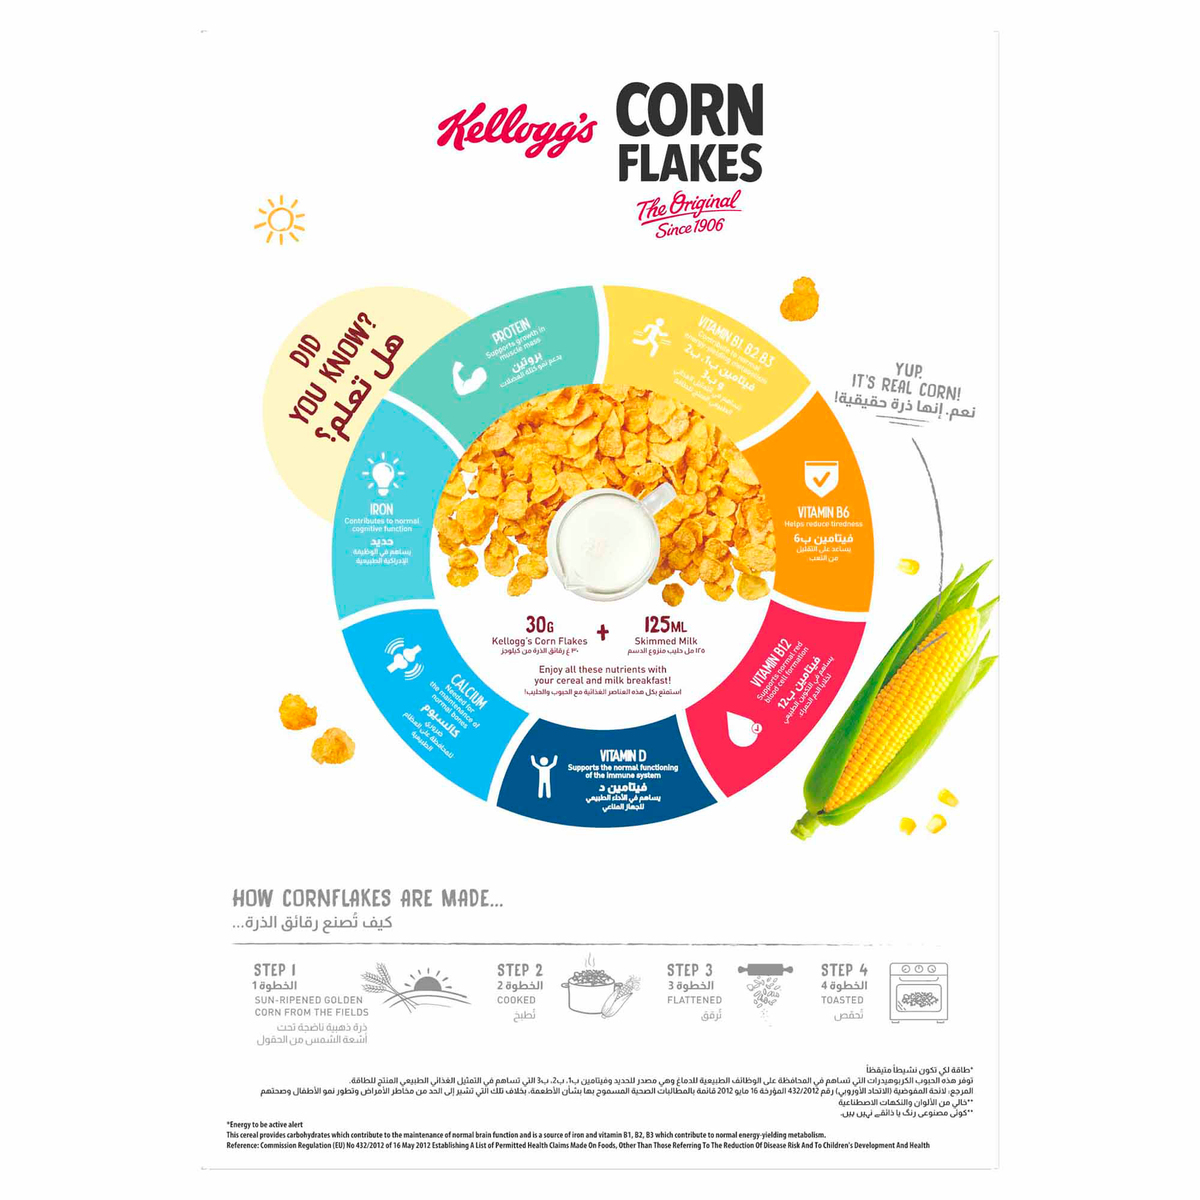 Kellogg's Corn Flakes The Original 1 kg